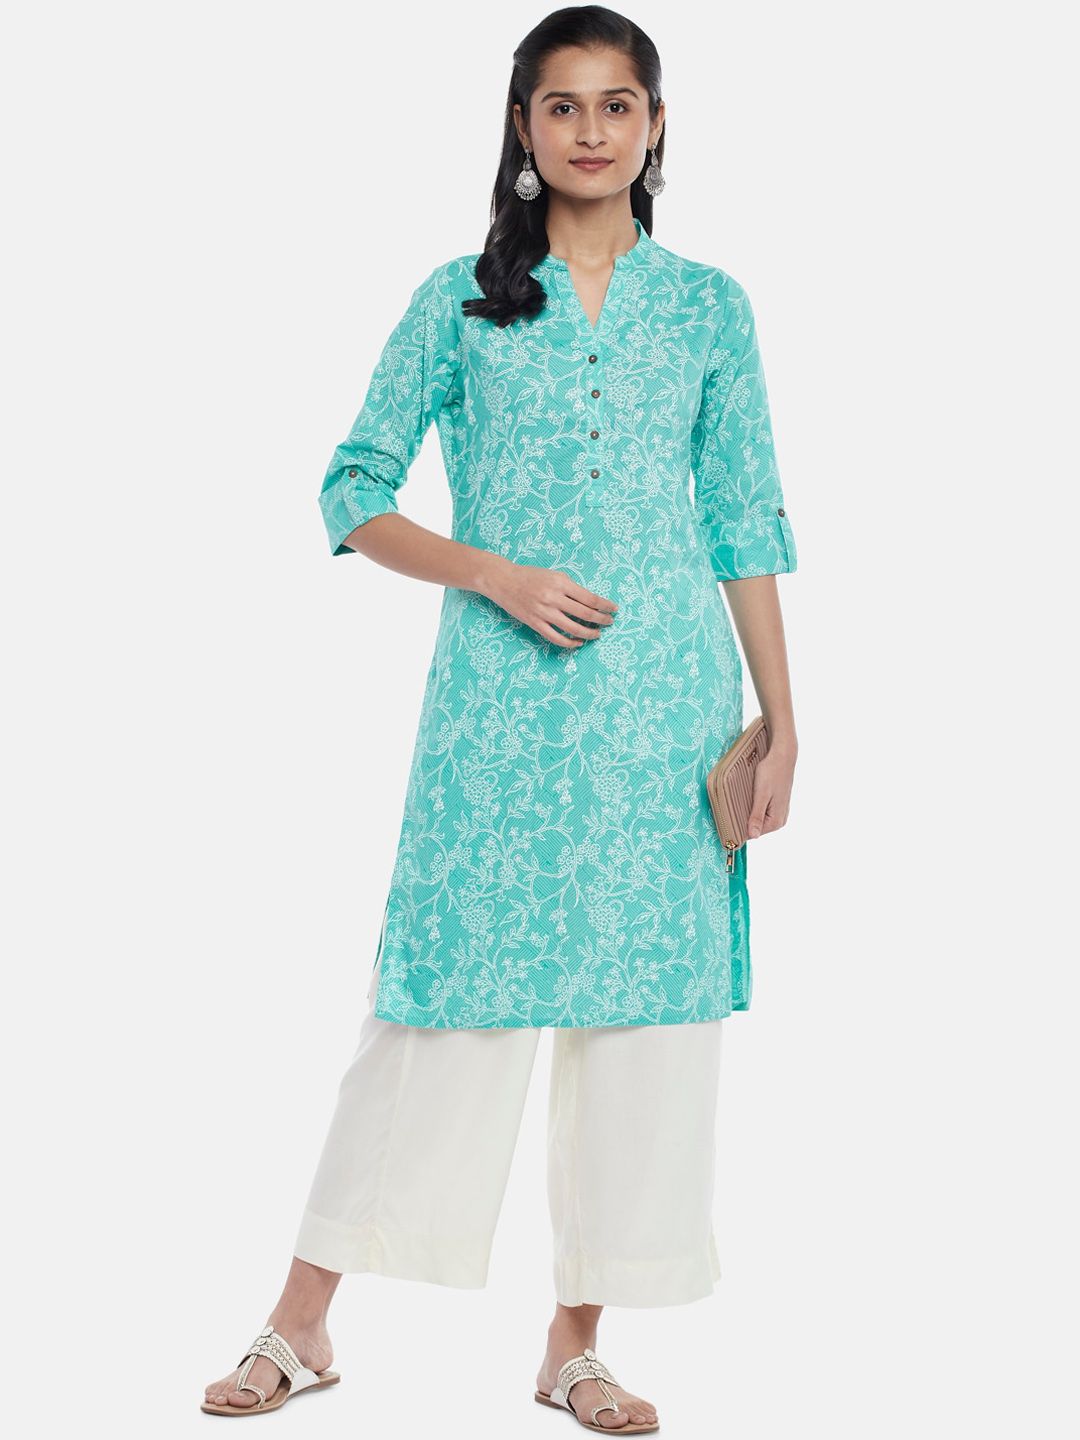 RANGMANCH BY PANTALOONS Women Green & White Floral Printed Cotton Straight Kurta Price in India